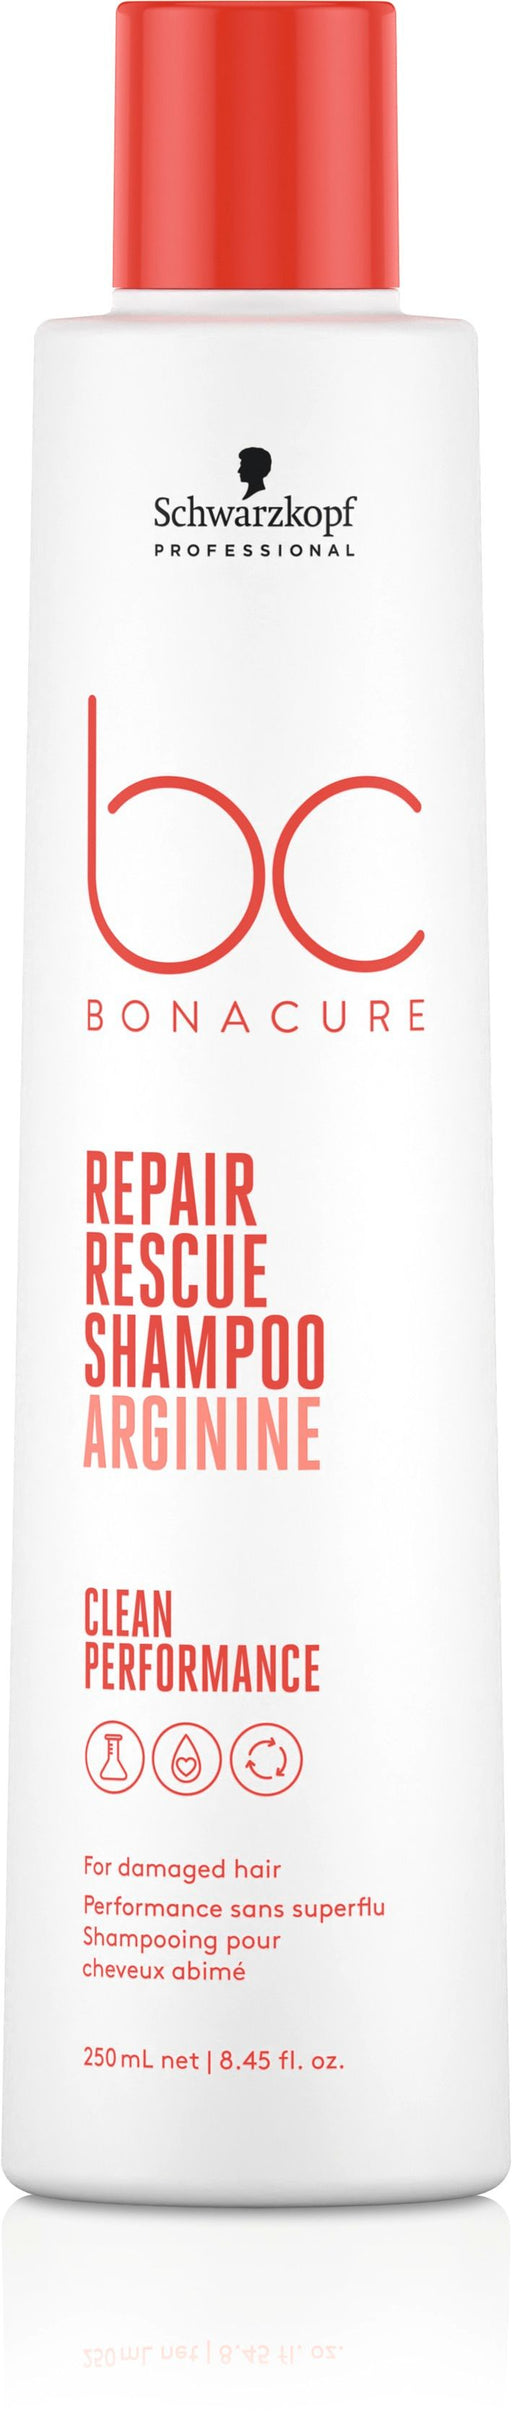 Schwarzkopf BC Clean Performance Repair Rescue Shampoo